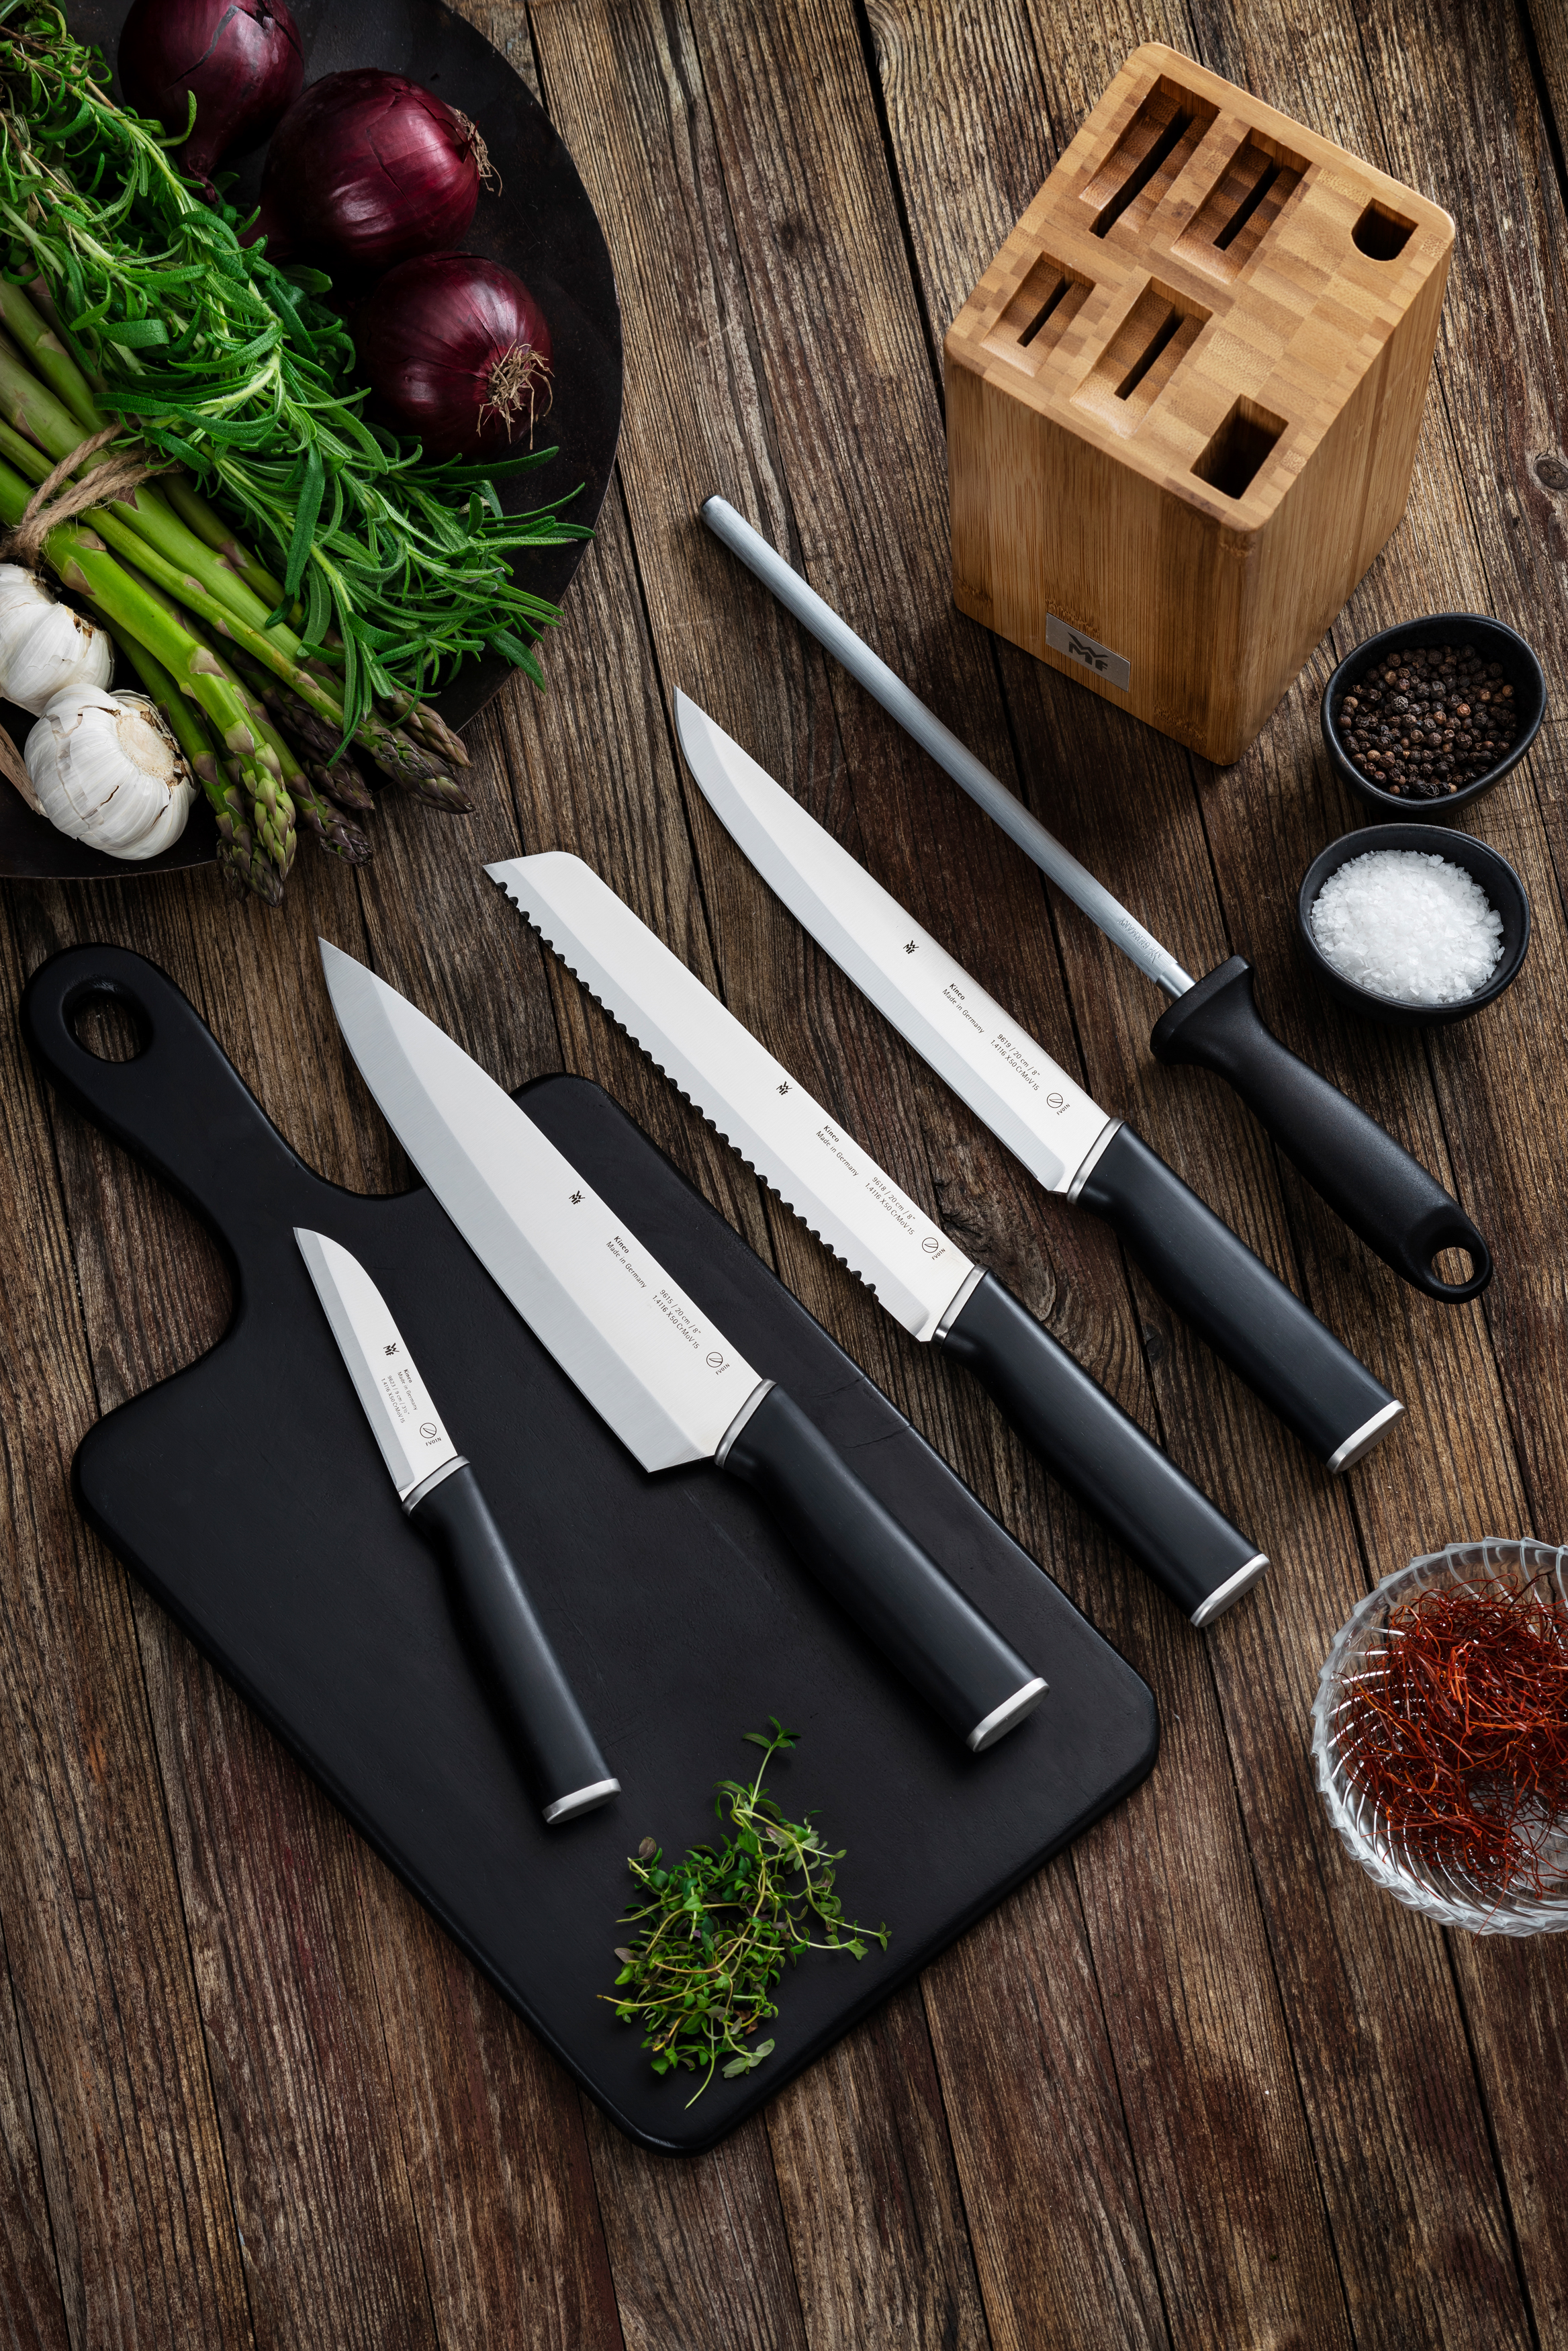 GOURMET 5ピース カトラリーセット ナイフ4本 キッチンバサミ まな板 人気ブランド - 調理器具